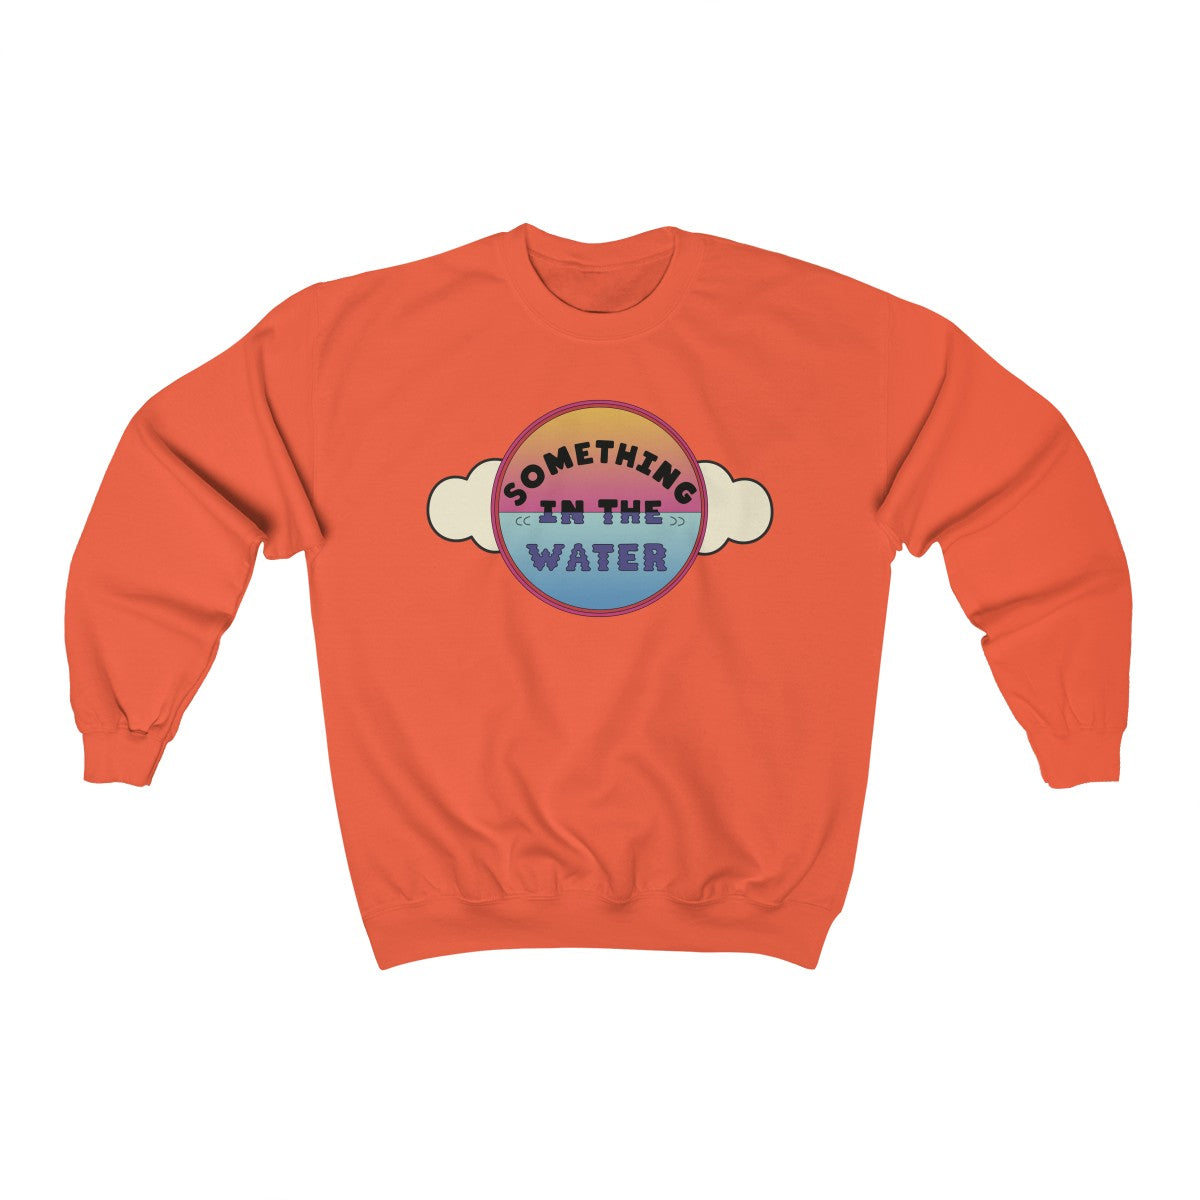 Something in the water Unisex Heavy Blend Crewneck Sweatshirt - Pharrell Williams festival merch inspired-Orange-S-Archethype